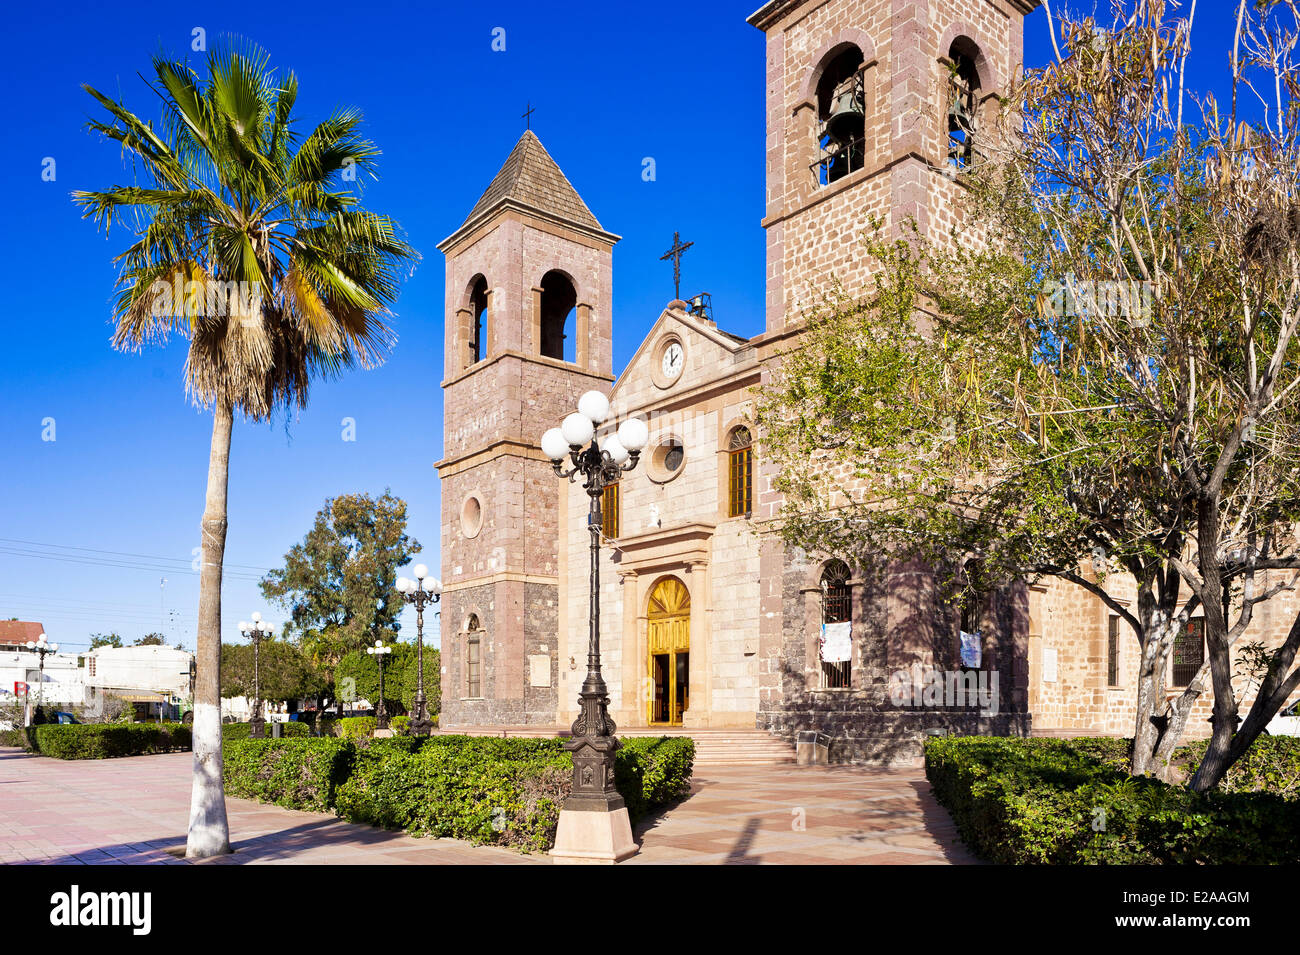 Mexico, Baja California Sur state, La Paz, the cathedral Nuestra Senora de la Paz Stock Photo